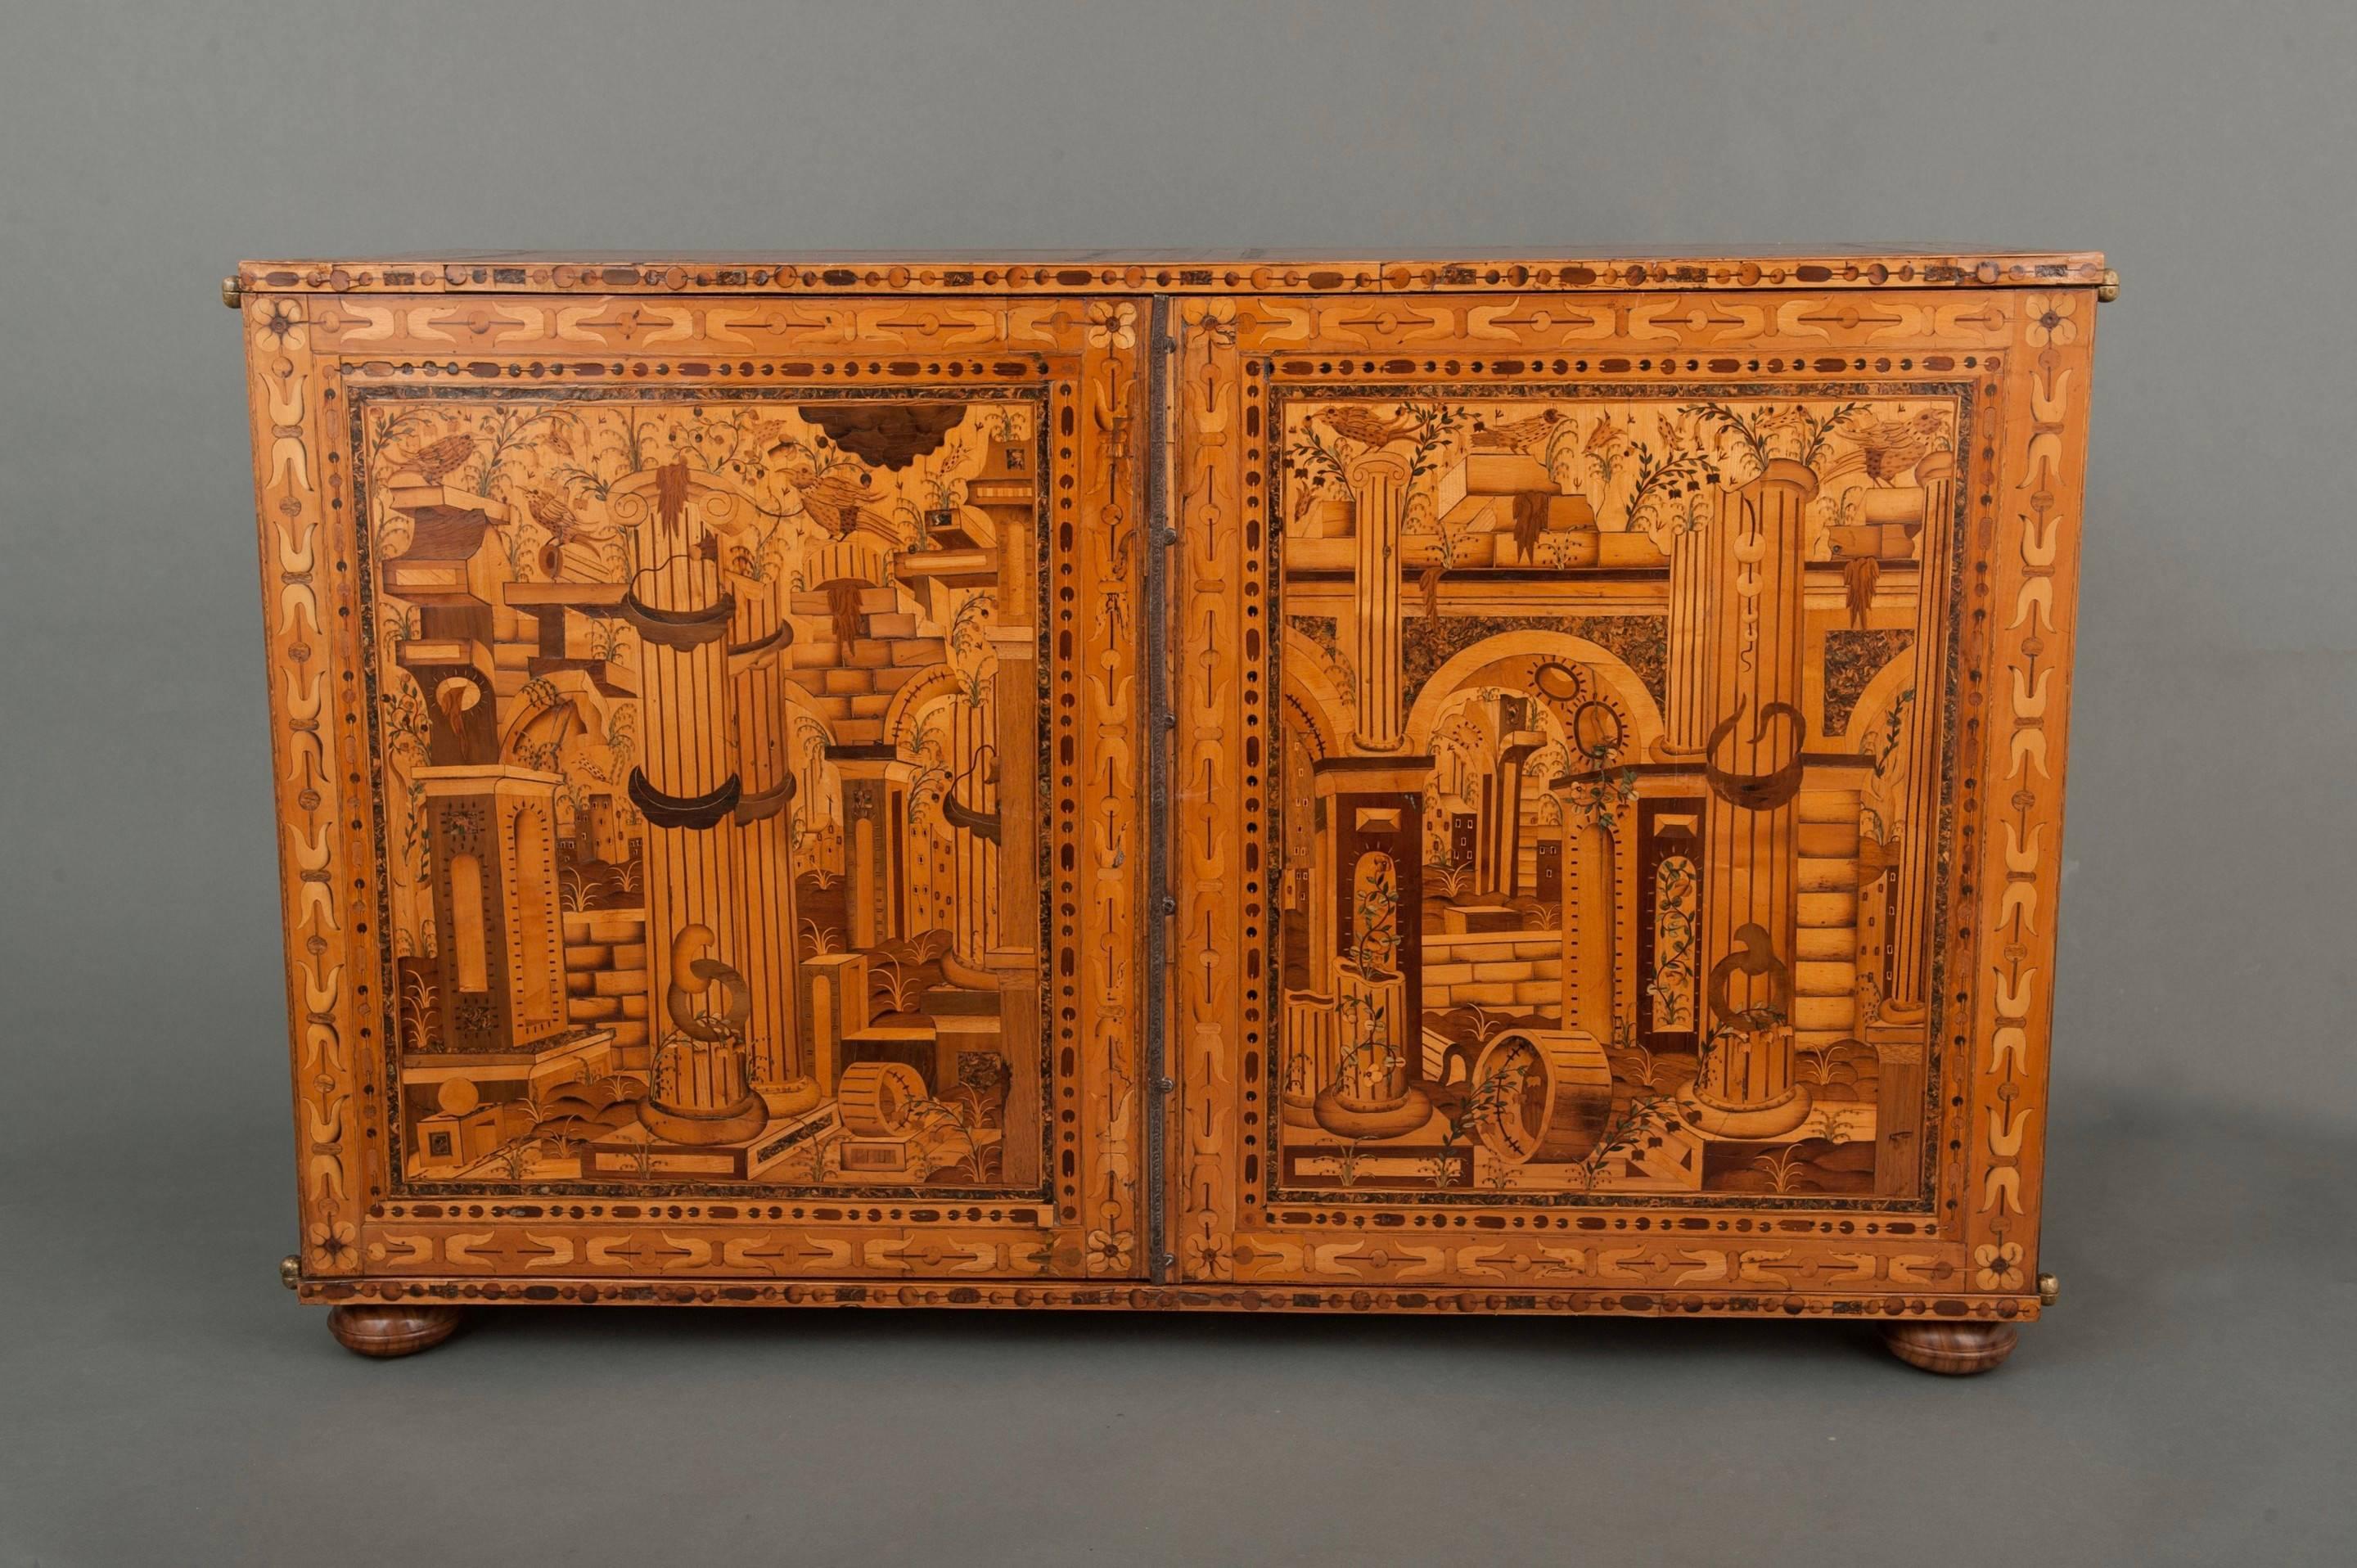 16th century cabinet